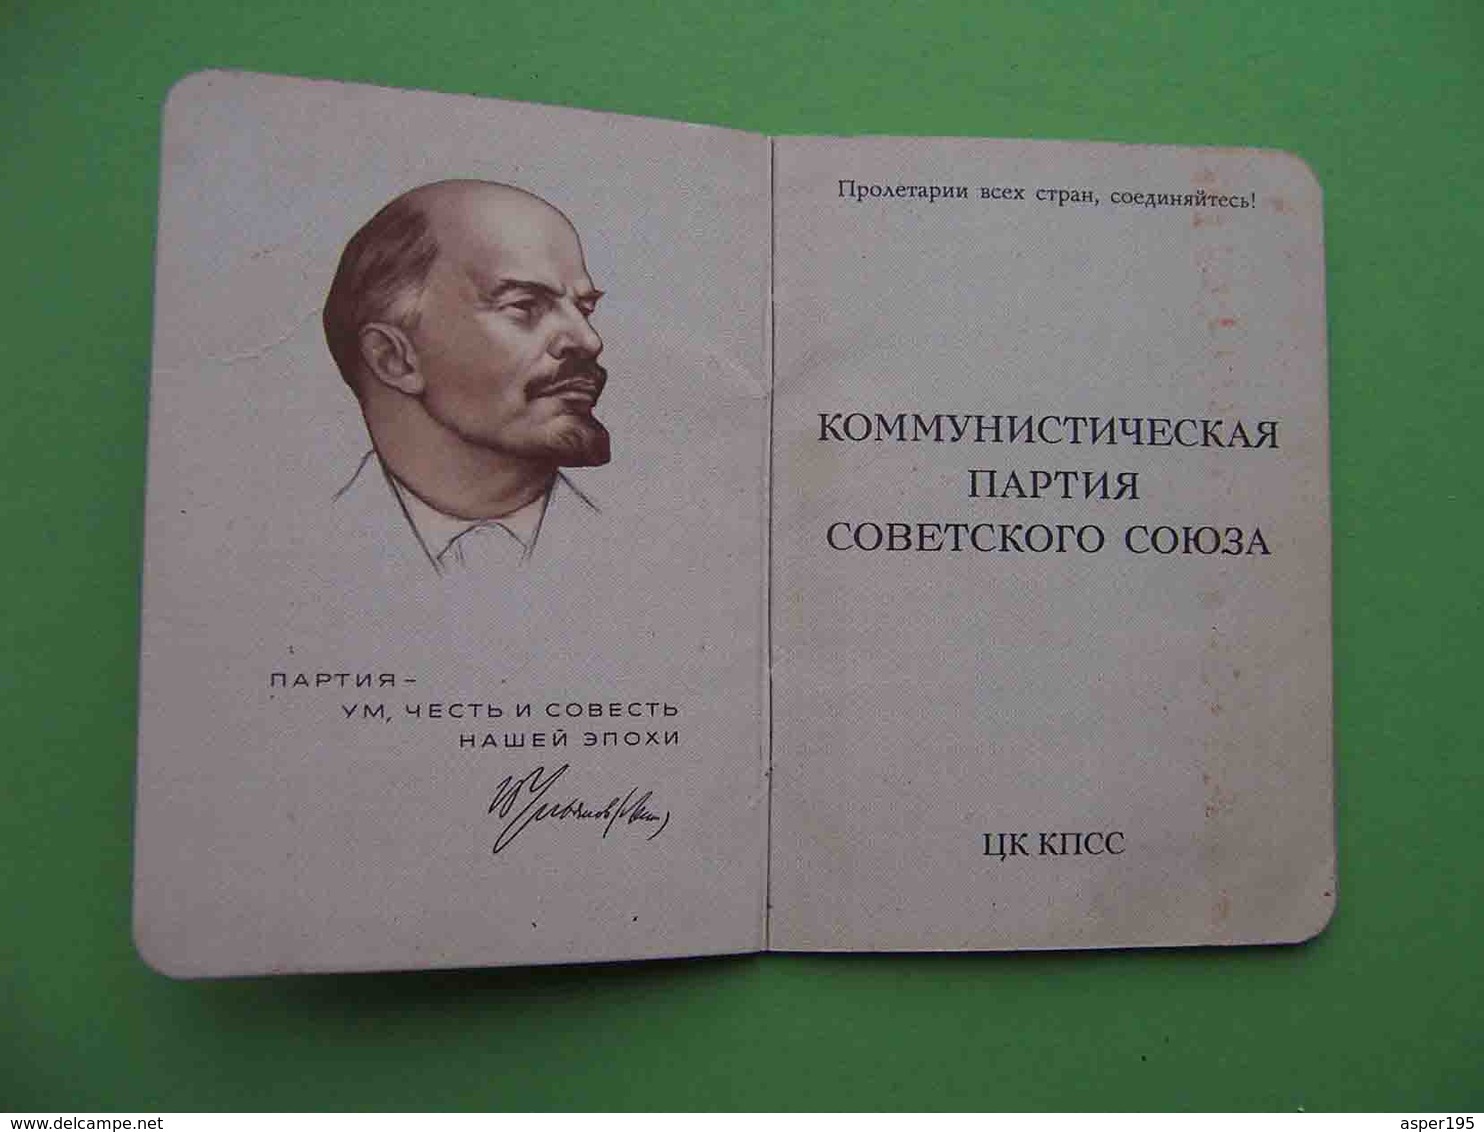 USSR 1973 KPSS Communist Party ID Document With Real Photo, LENIN. - Historische Dokumente